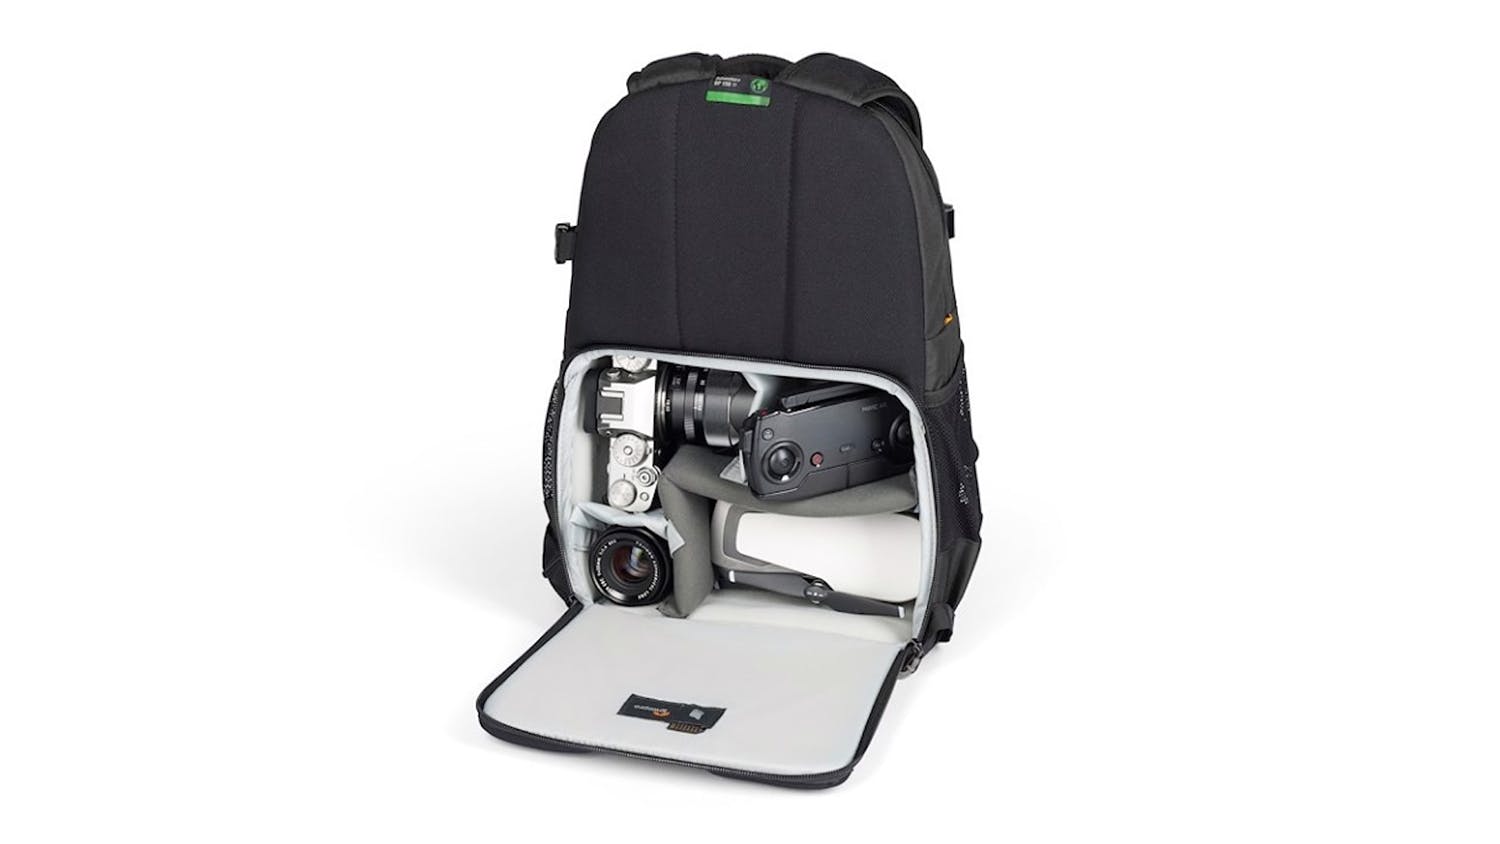 Lowepro Adventura 150 III Backpack - Black